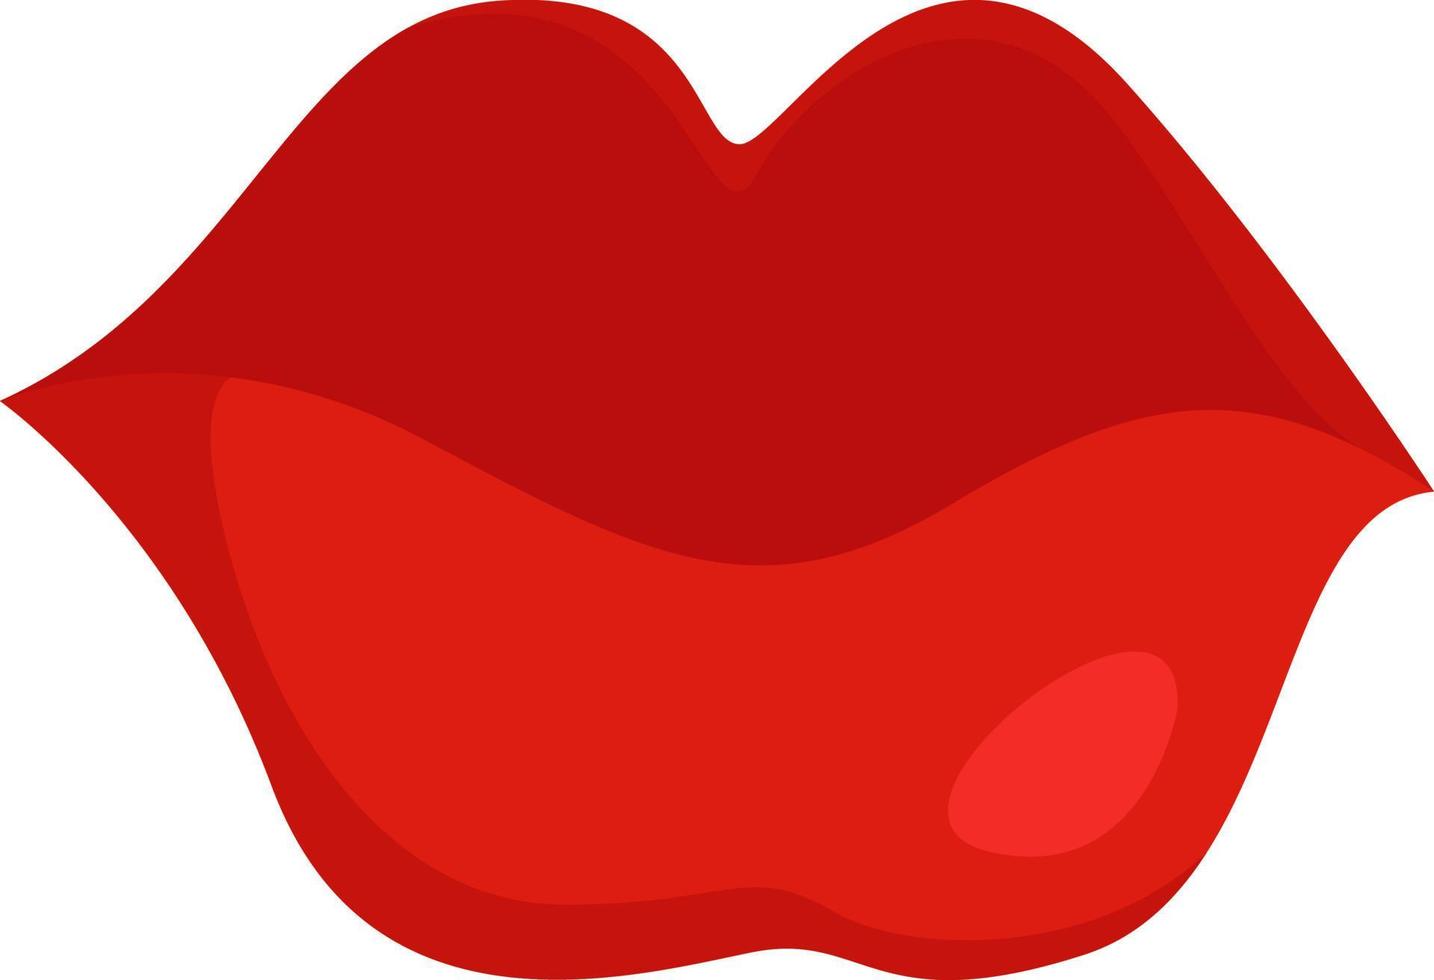 Red lips , illustration, vector on white background